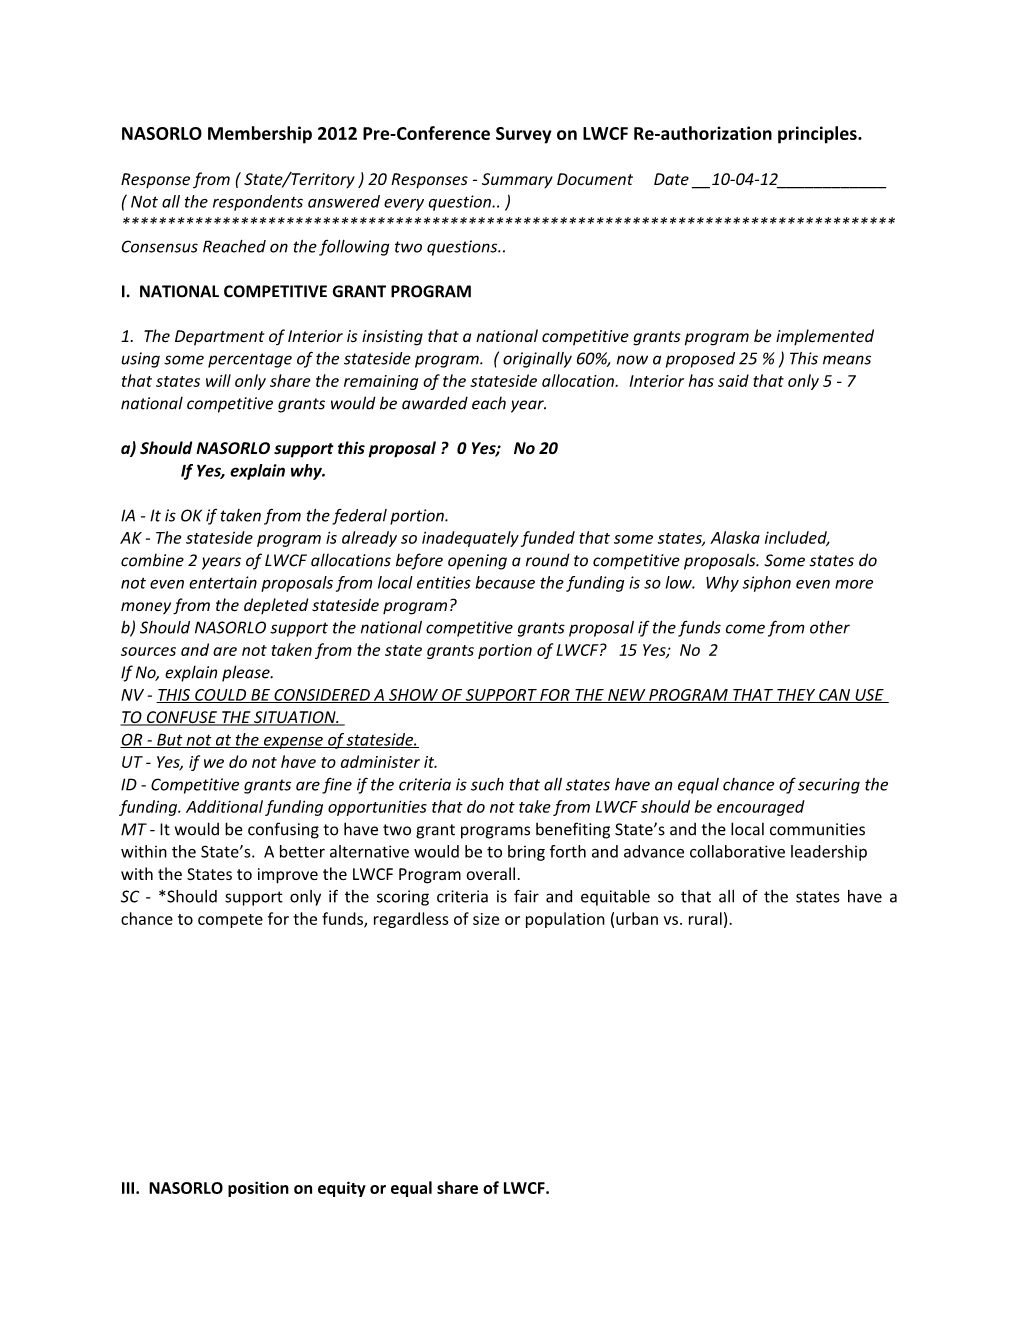 NASORLO Membership 2012 Pre-Conference Survey on LWCF Re-Authorization Principles